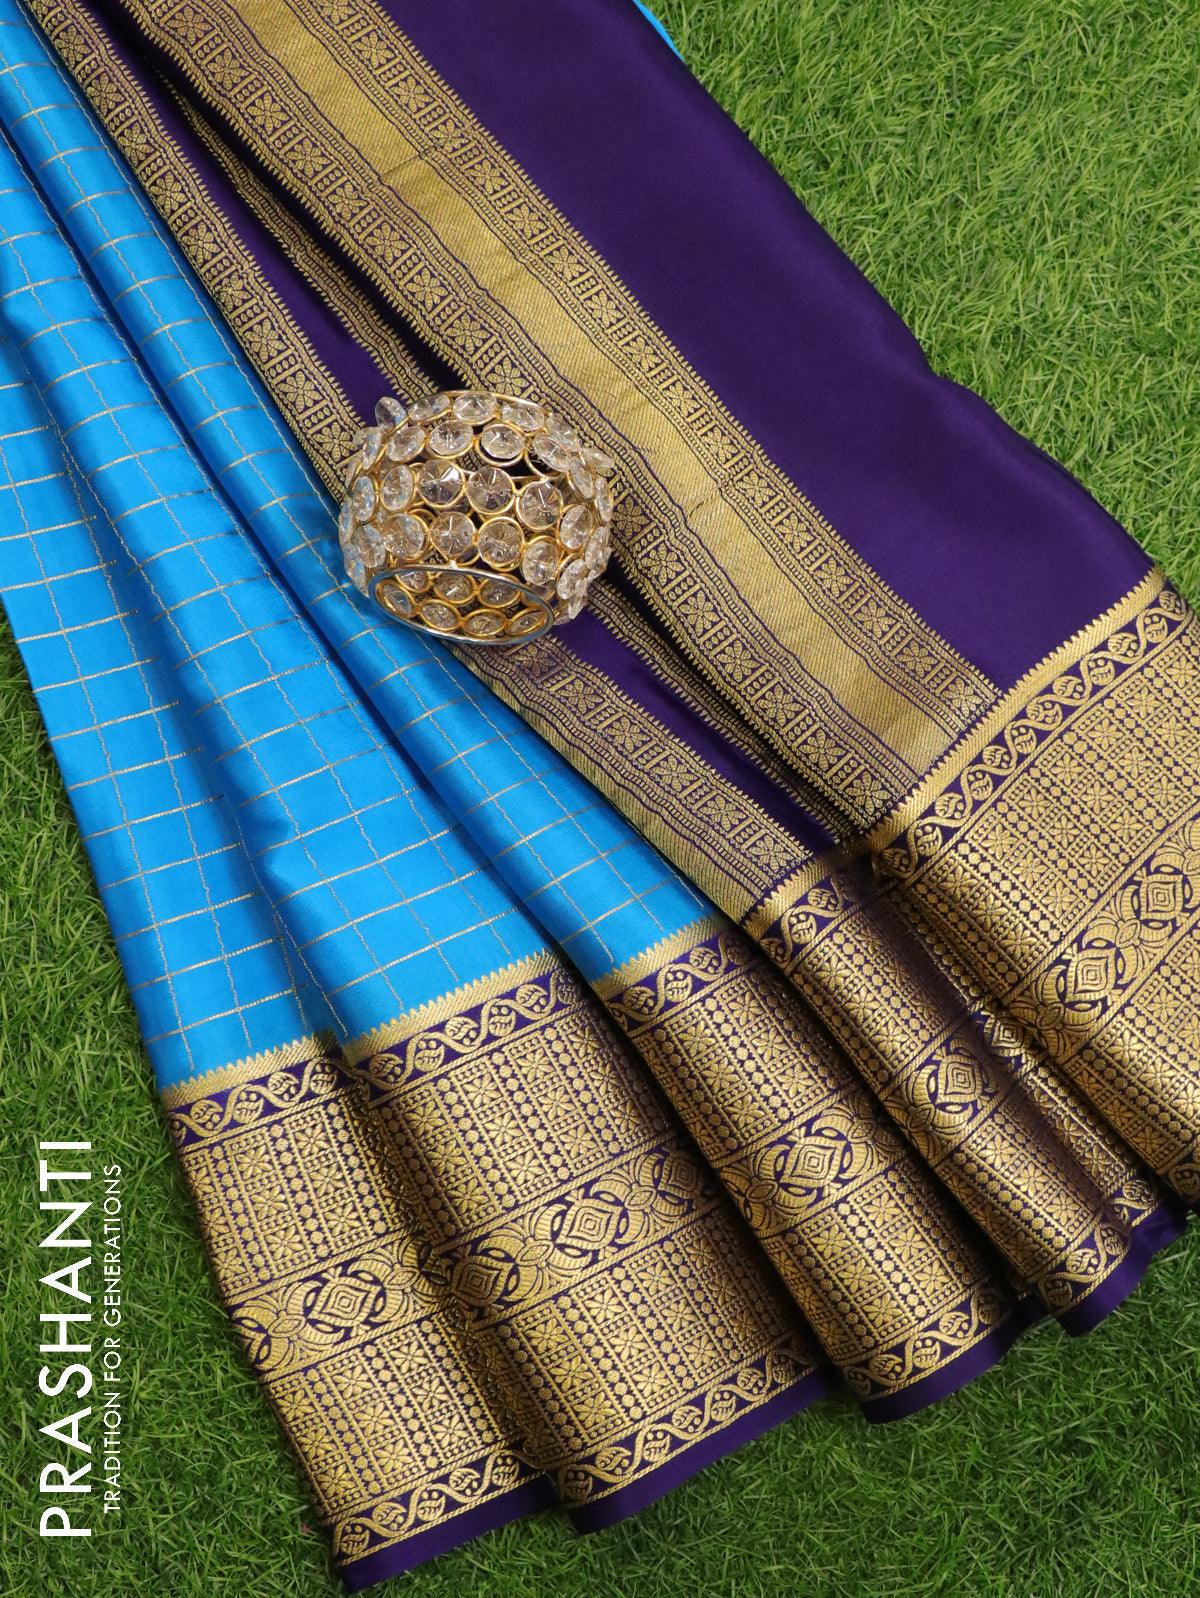 GGF Semi-Mysore silk sarees with rich pallu at Rs.850/Piece in surat offer  by geet gauri fashion